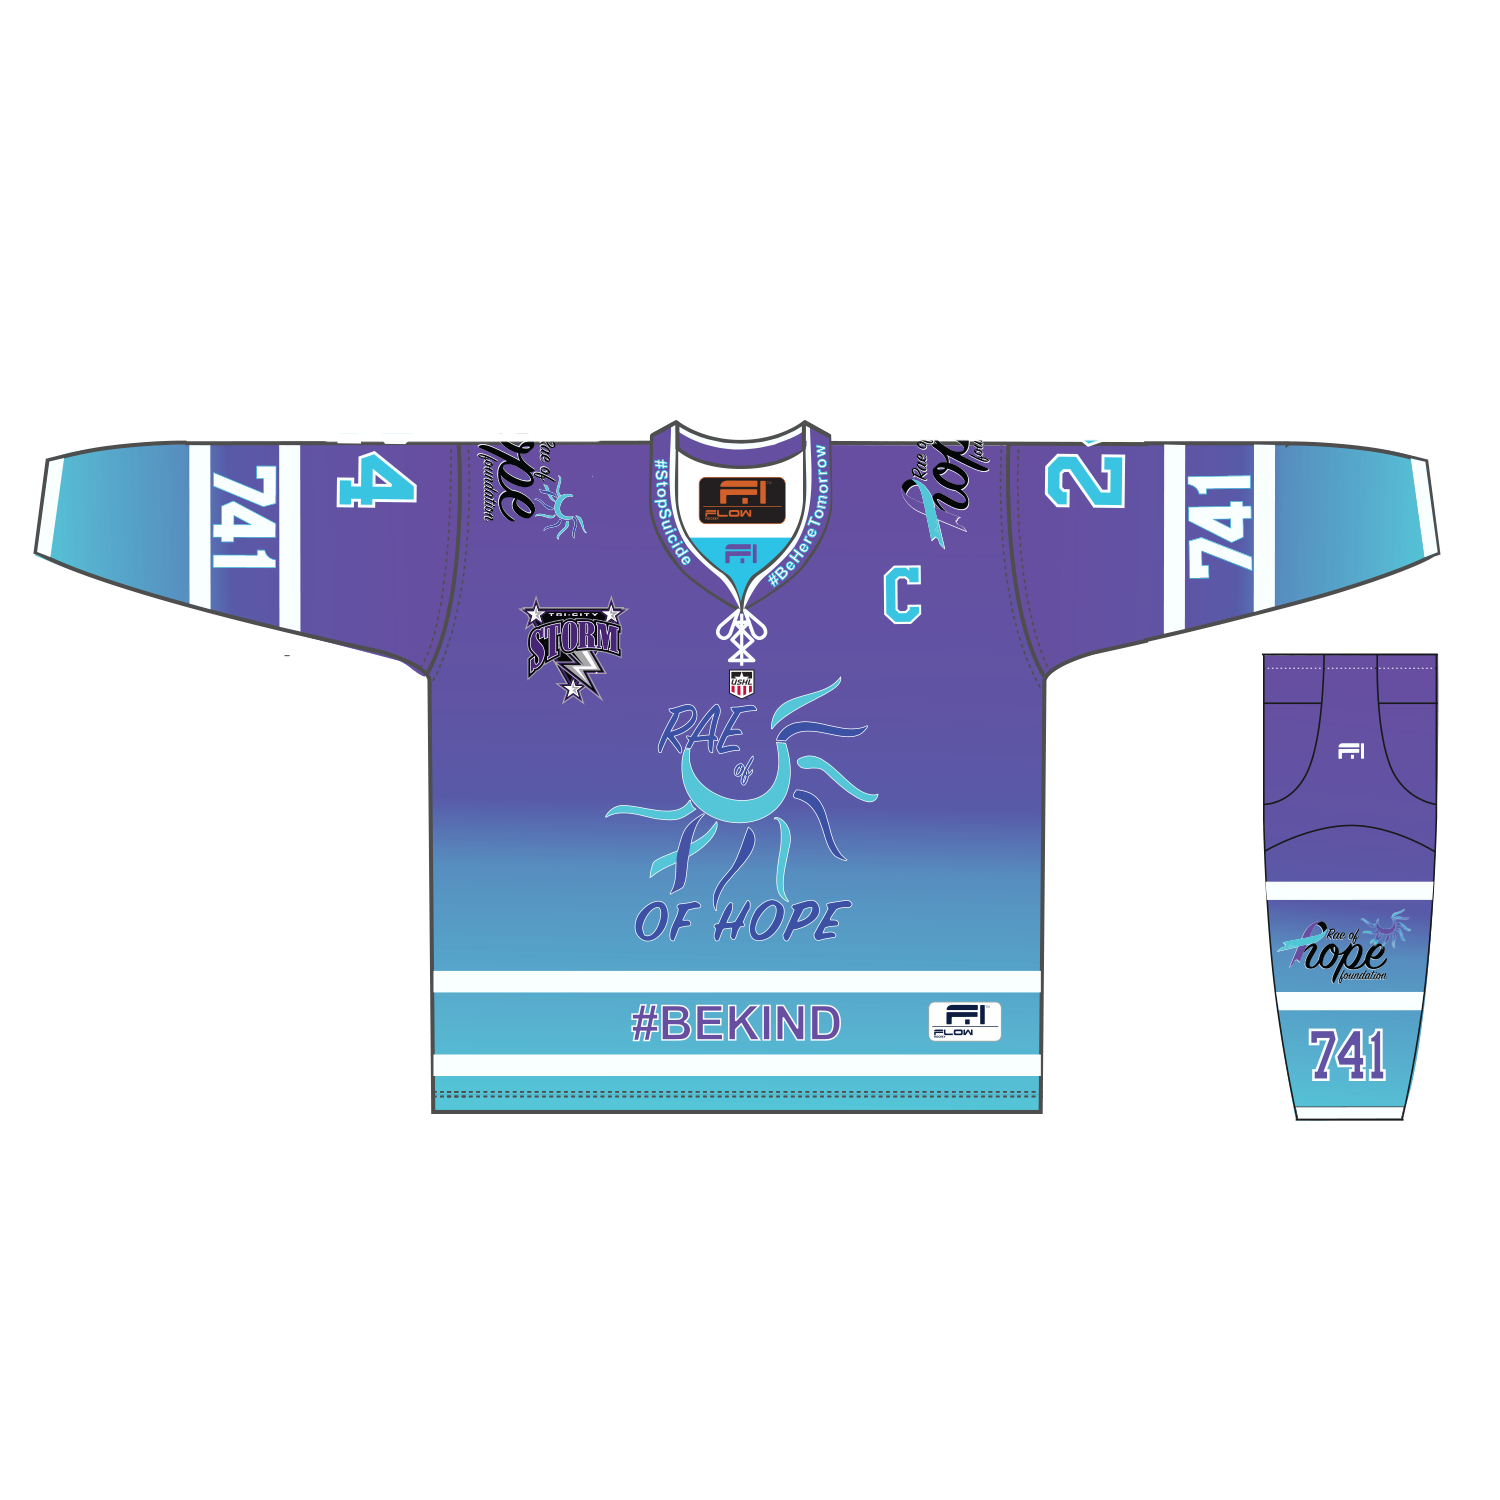 Design hockey jerseys » 100% customized jerseys